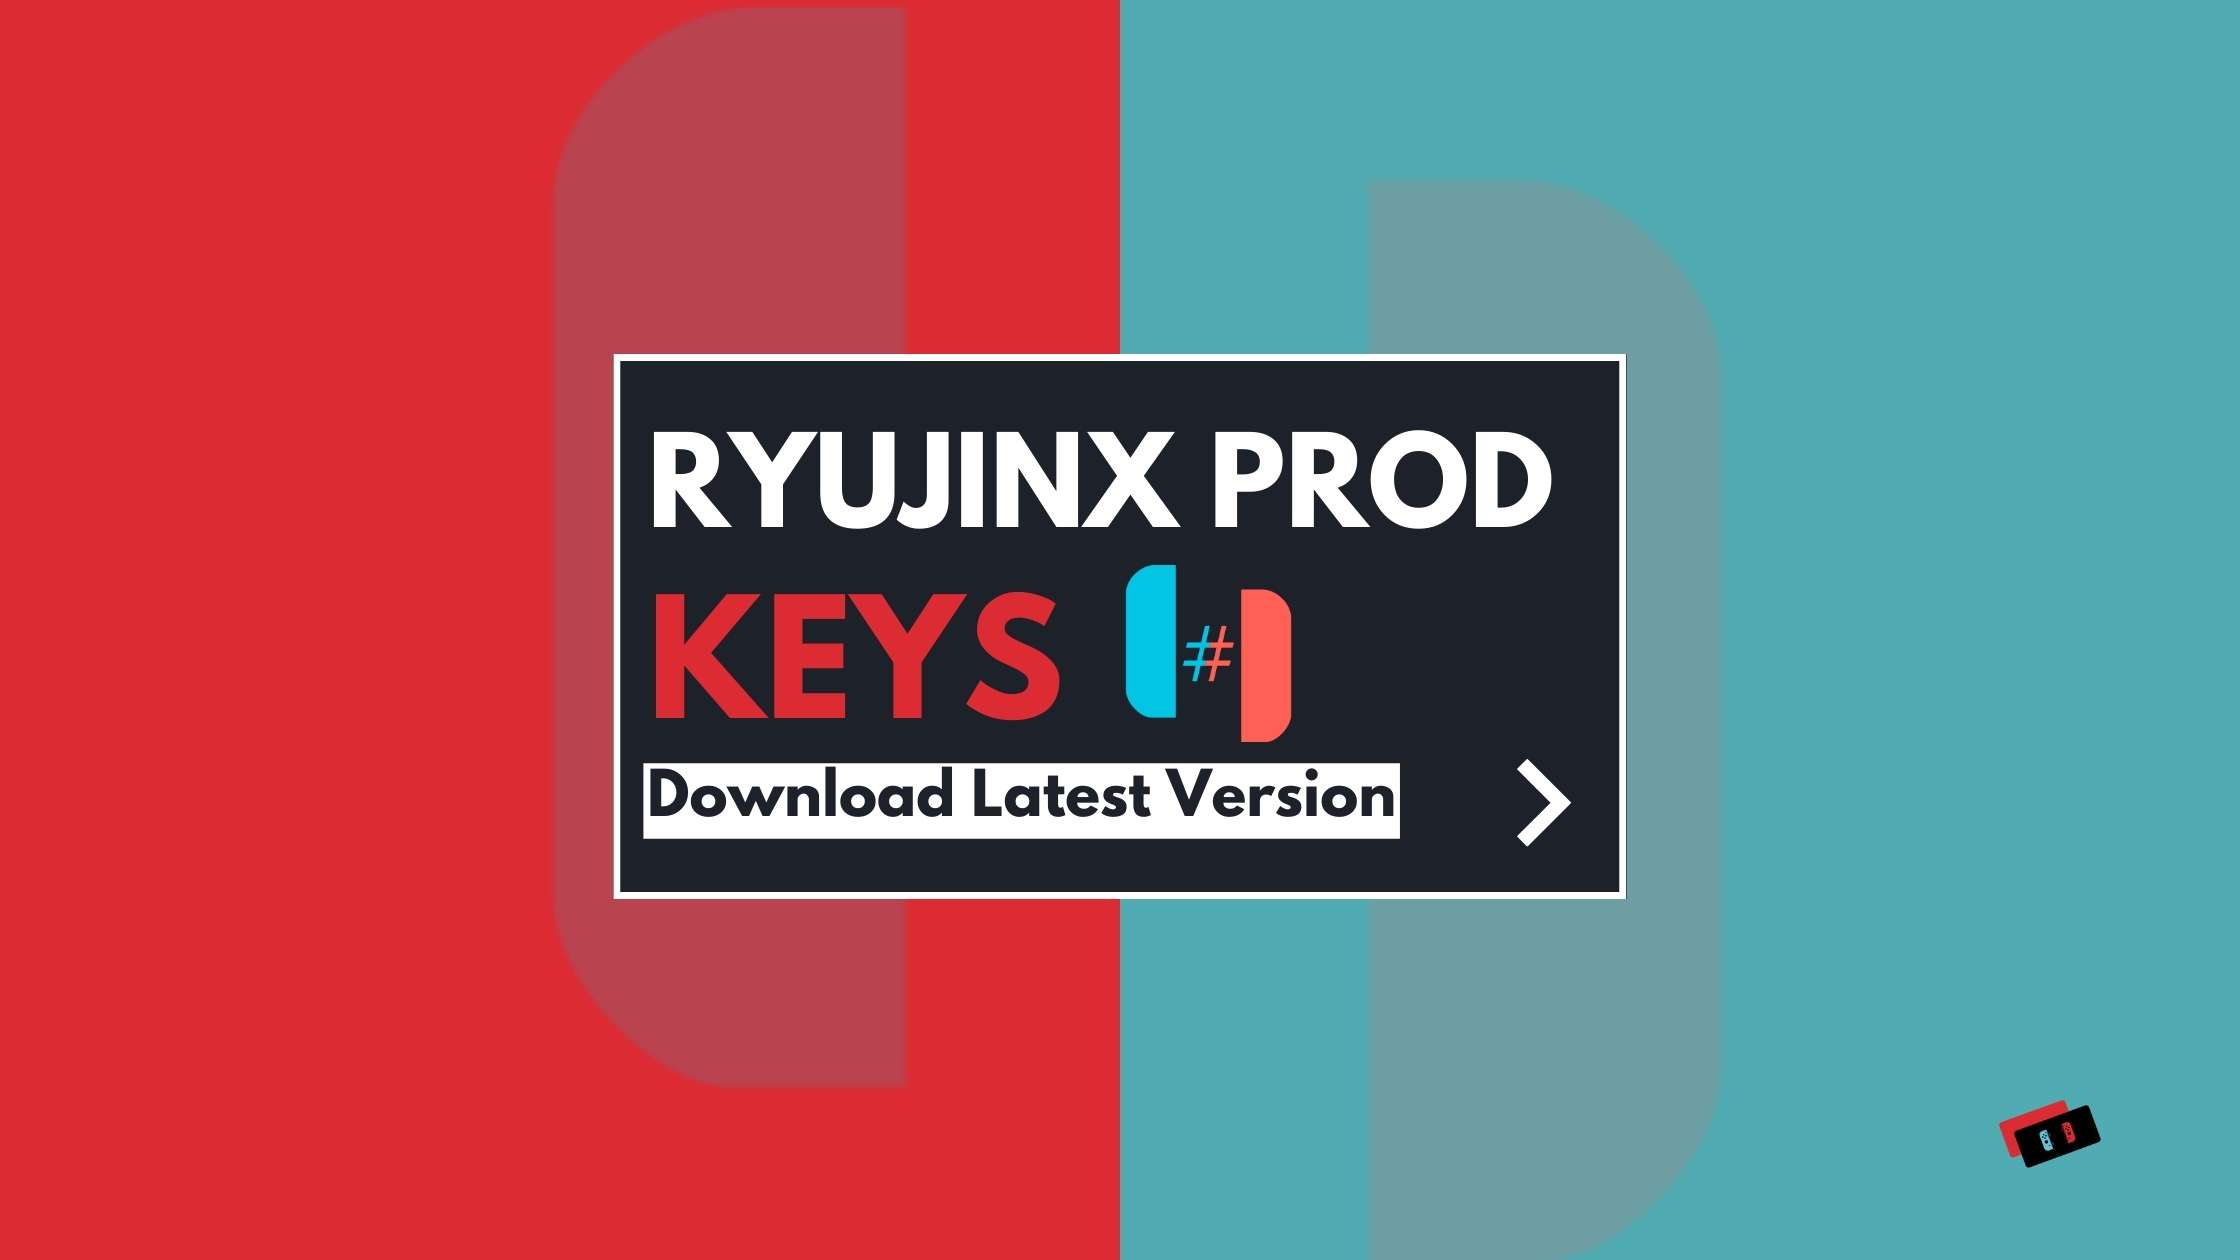 ryujinx prod keys